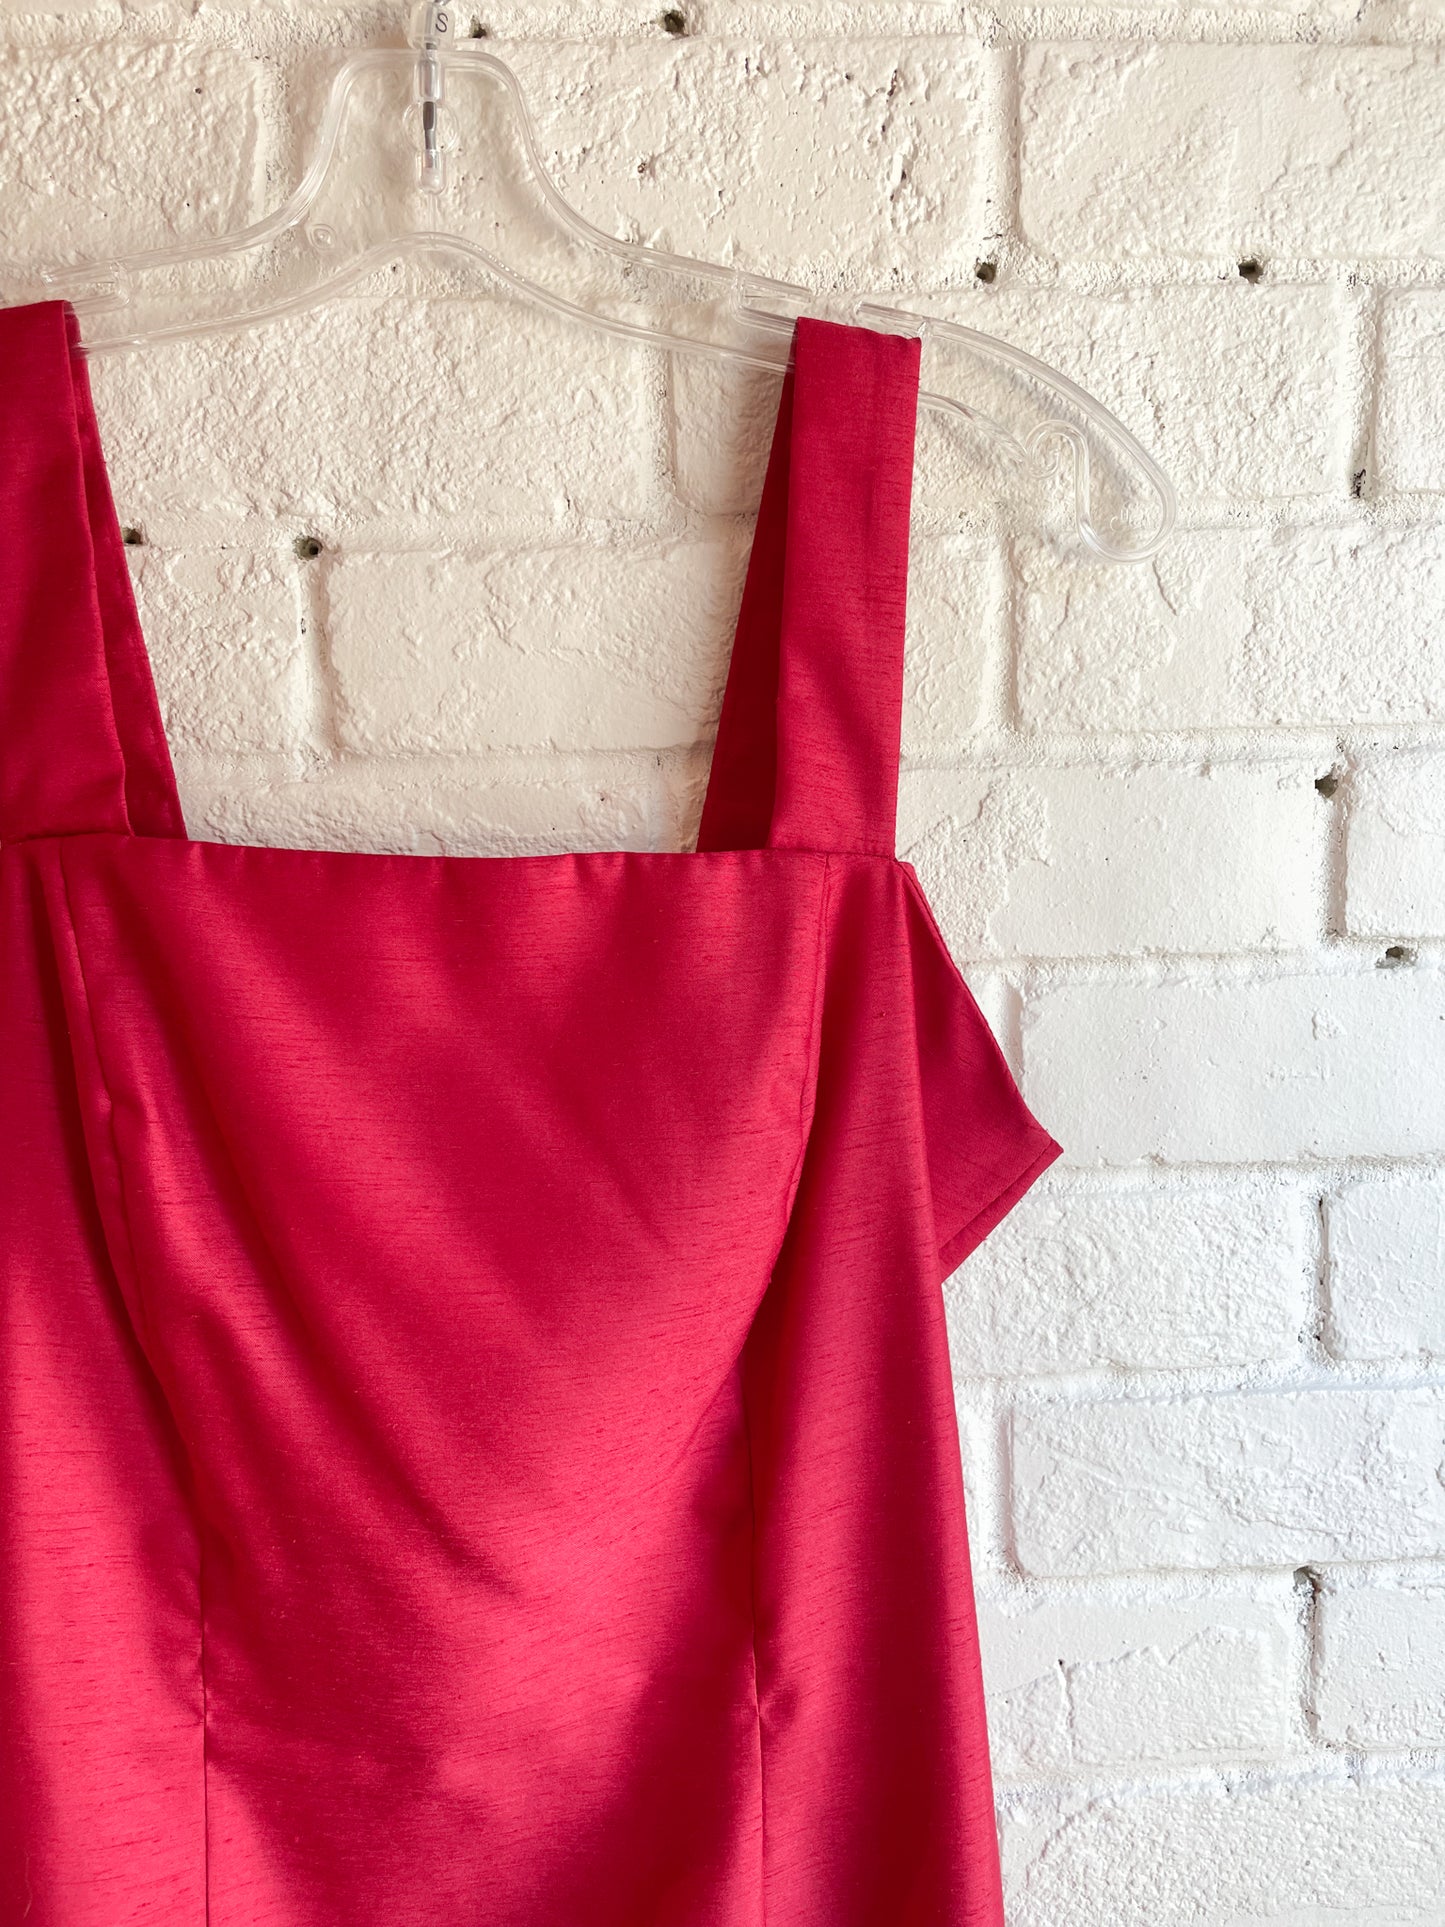 Vintage Red Satin Square Neckline Sheath Midi Dress - Small